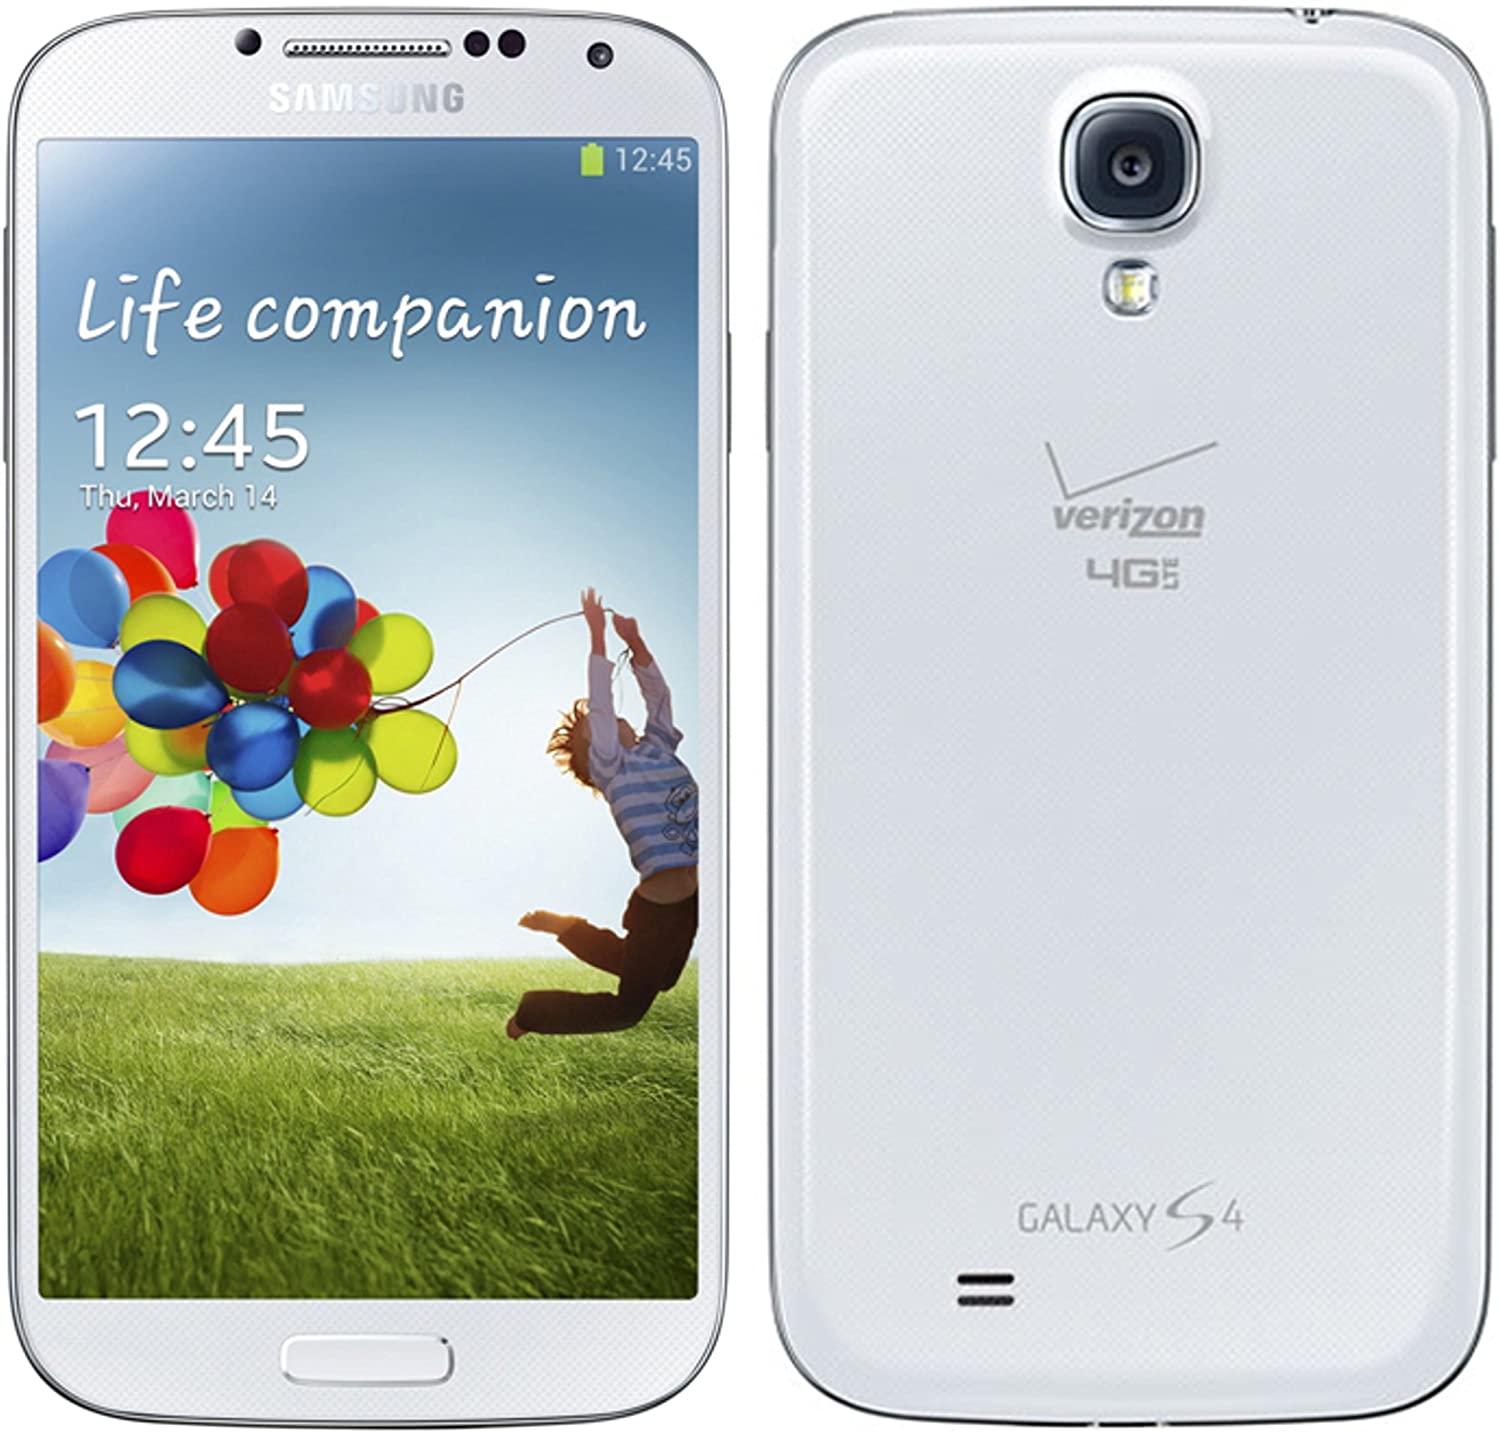 Samsung galaxy s24 экран. Samsung Galaxy s4. Galaxy s4 gt-i9500. Samsung Galaxy s4 2018. Samsung Galaxy s4 White.